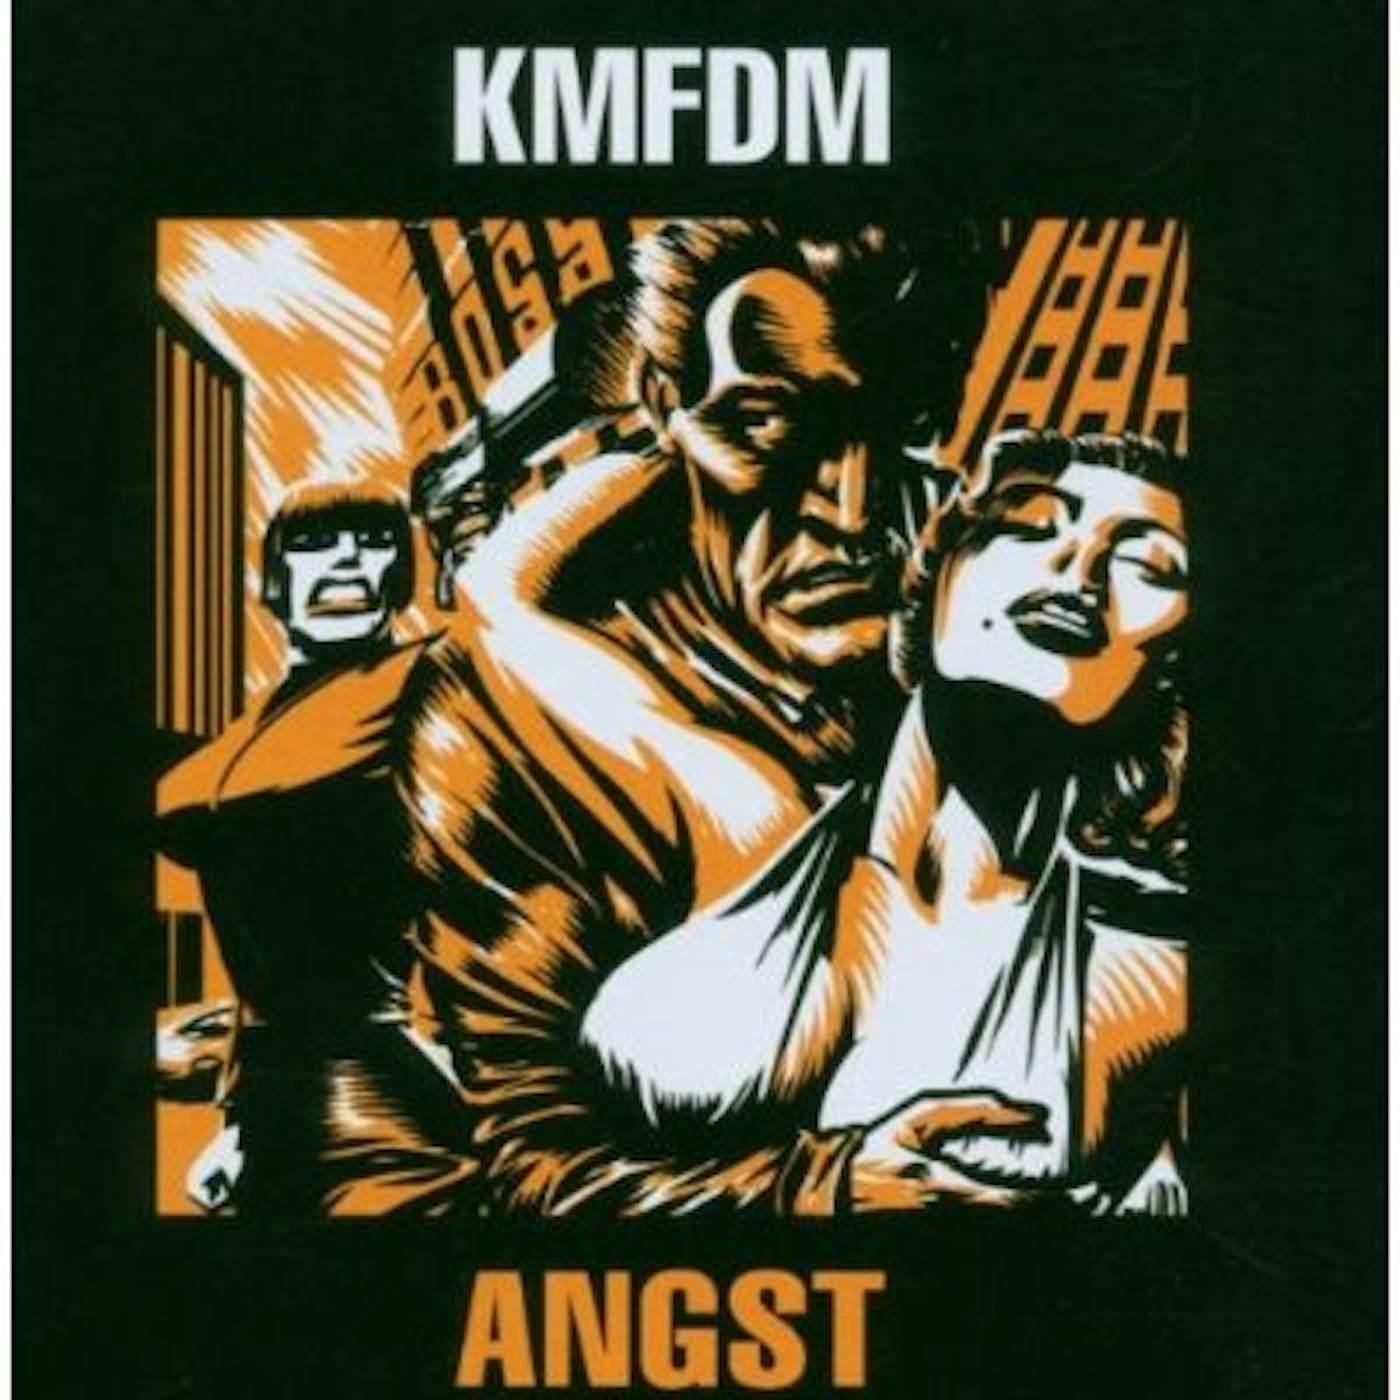 KMFDM ANGST CD